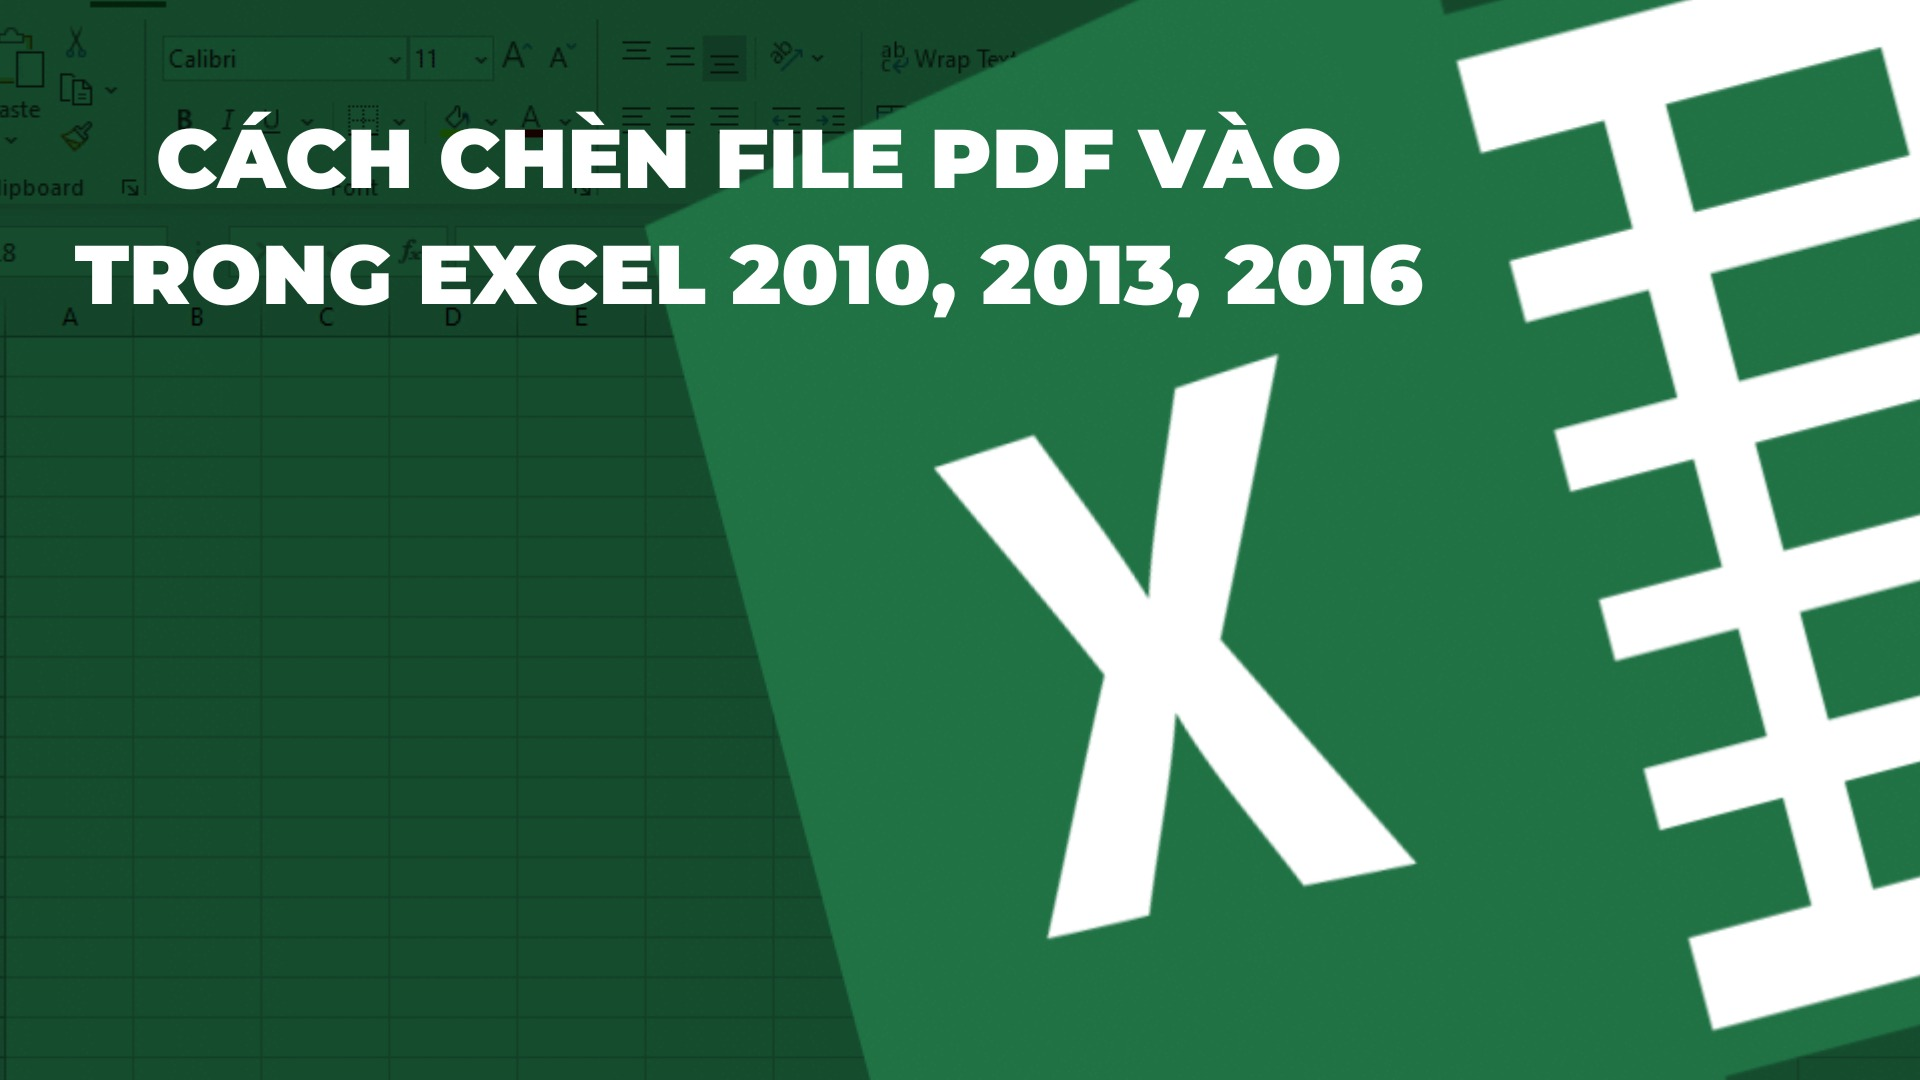 cach-chen-file-pdf-vao-bang-tinh-excel